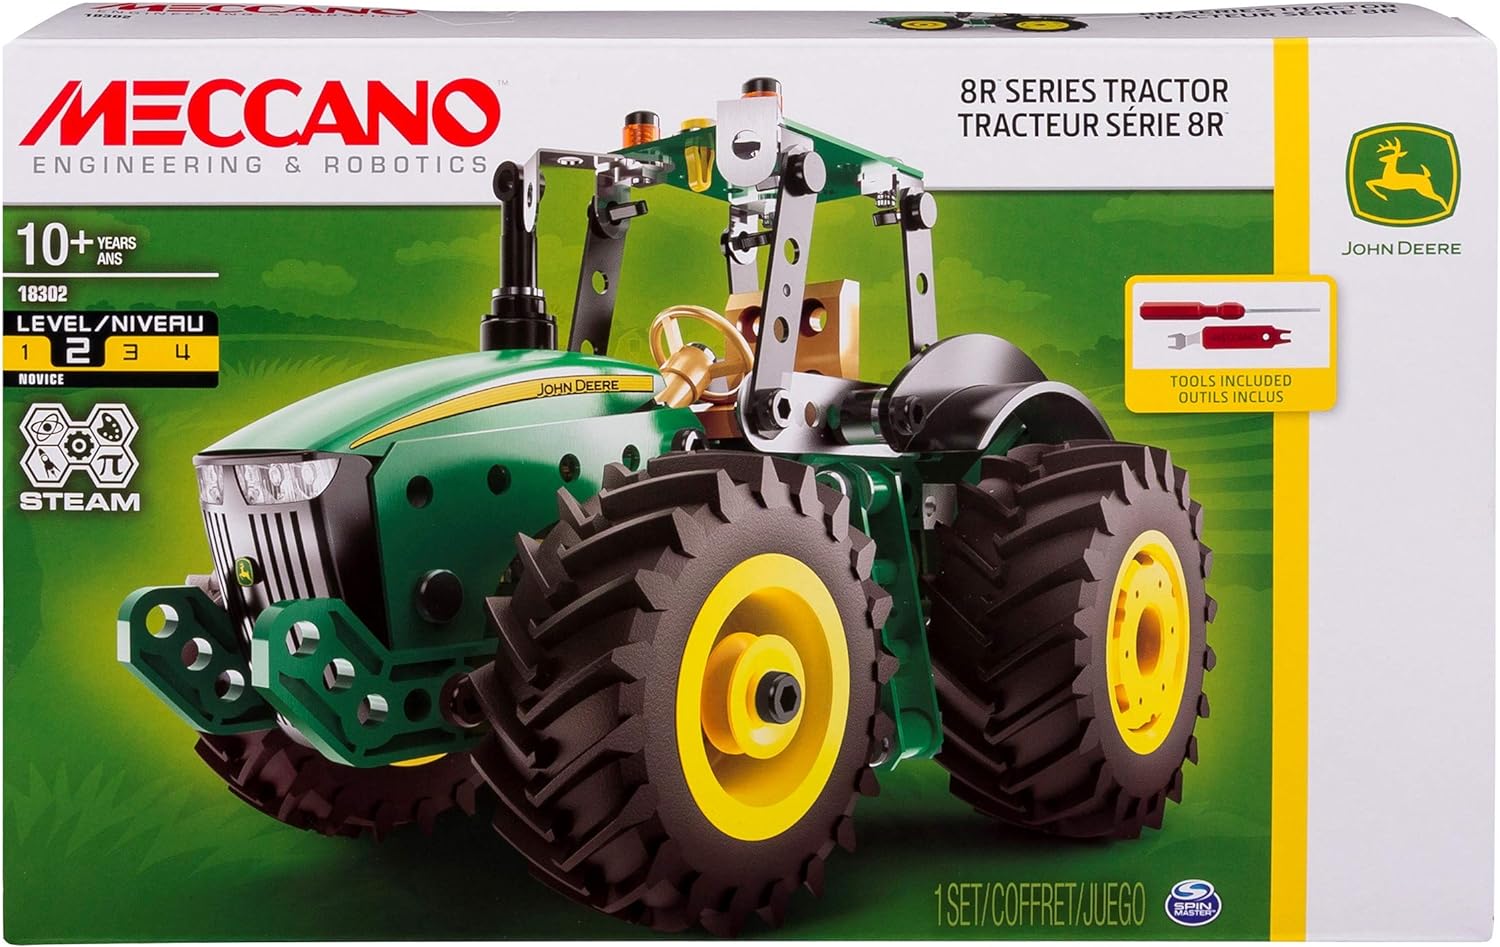 Meccano Set 18302 John Deere 8R Series Tractor Engineering & Robotics Steam